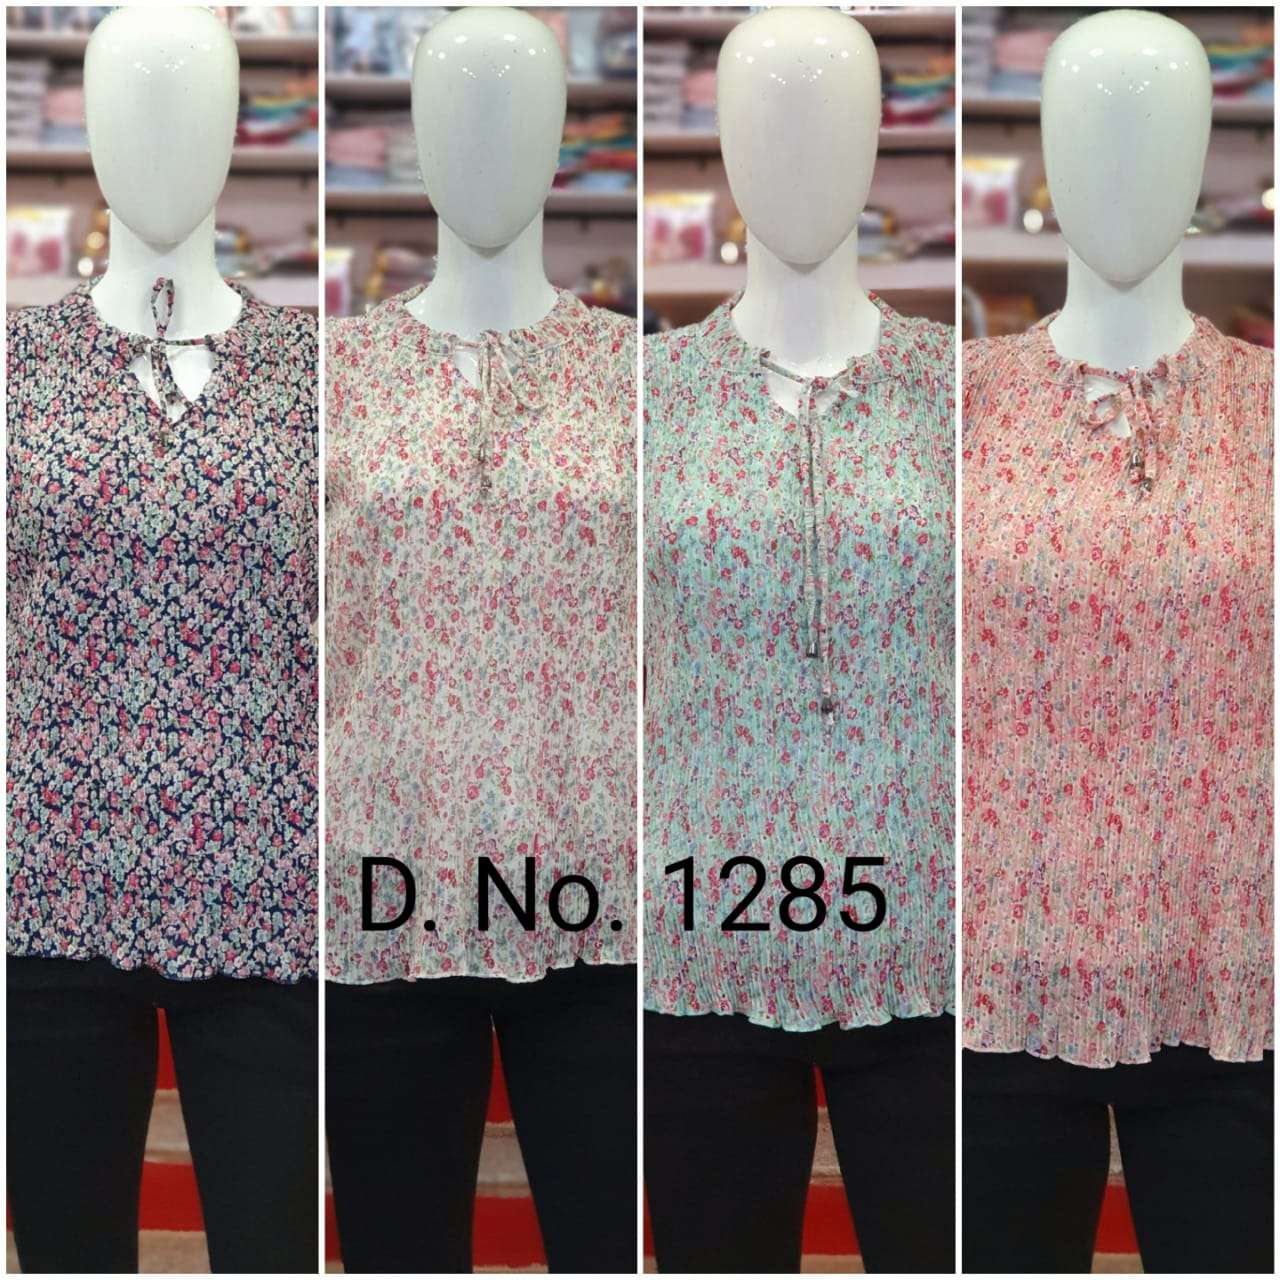 buy pratham fashion 1285 short tops latest catalogue wholesale price surat